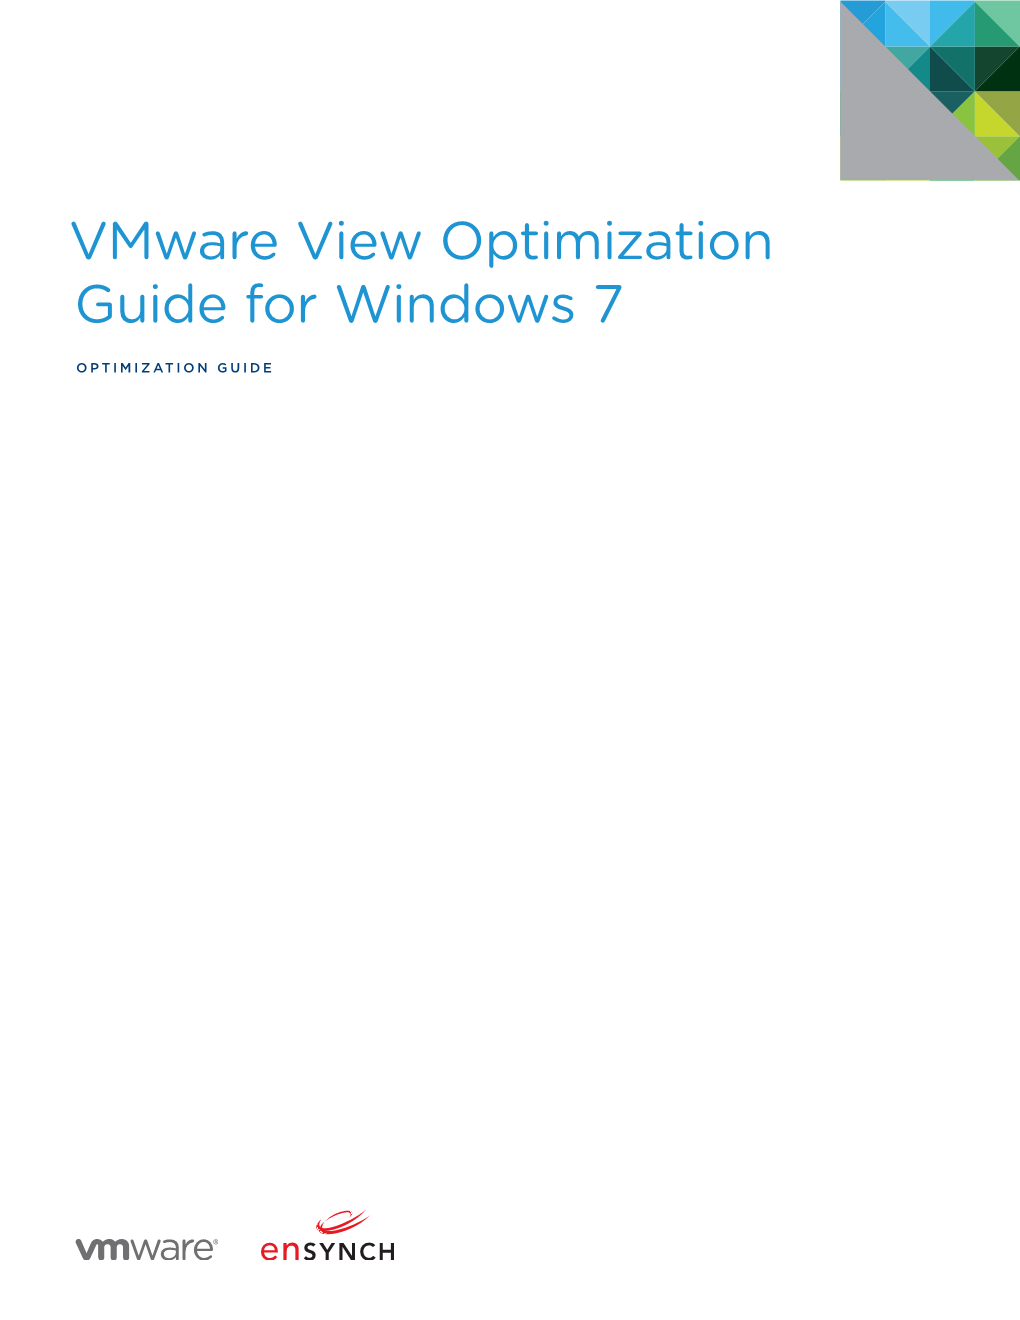 Vmware View Optimization Guide for Windows 7